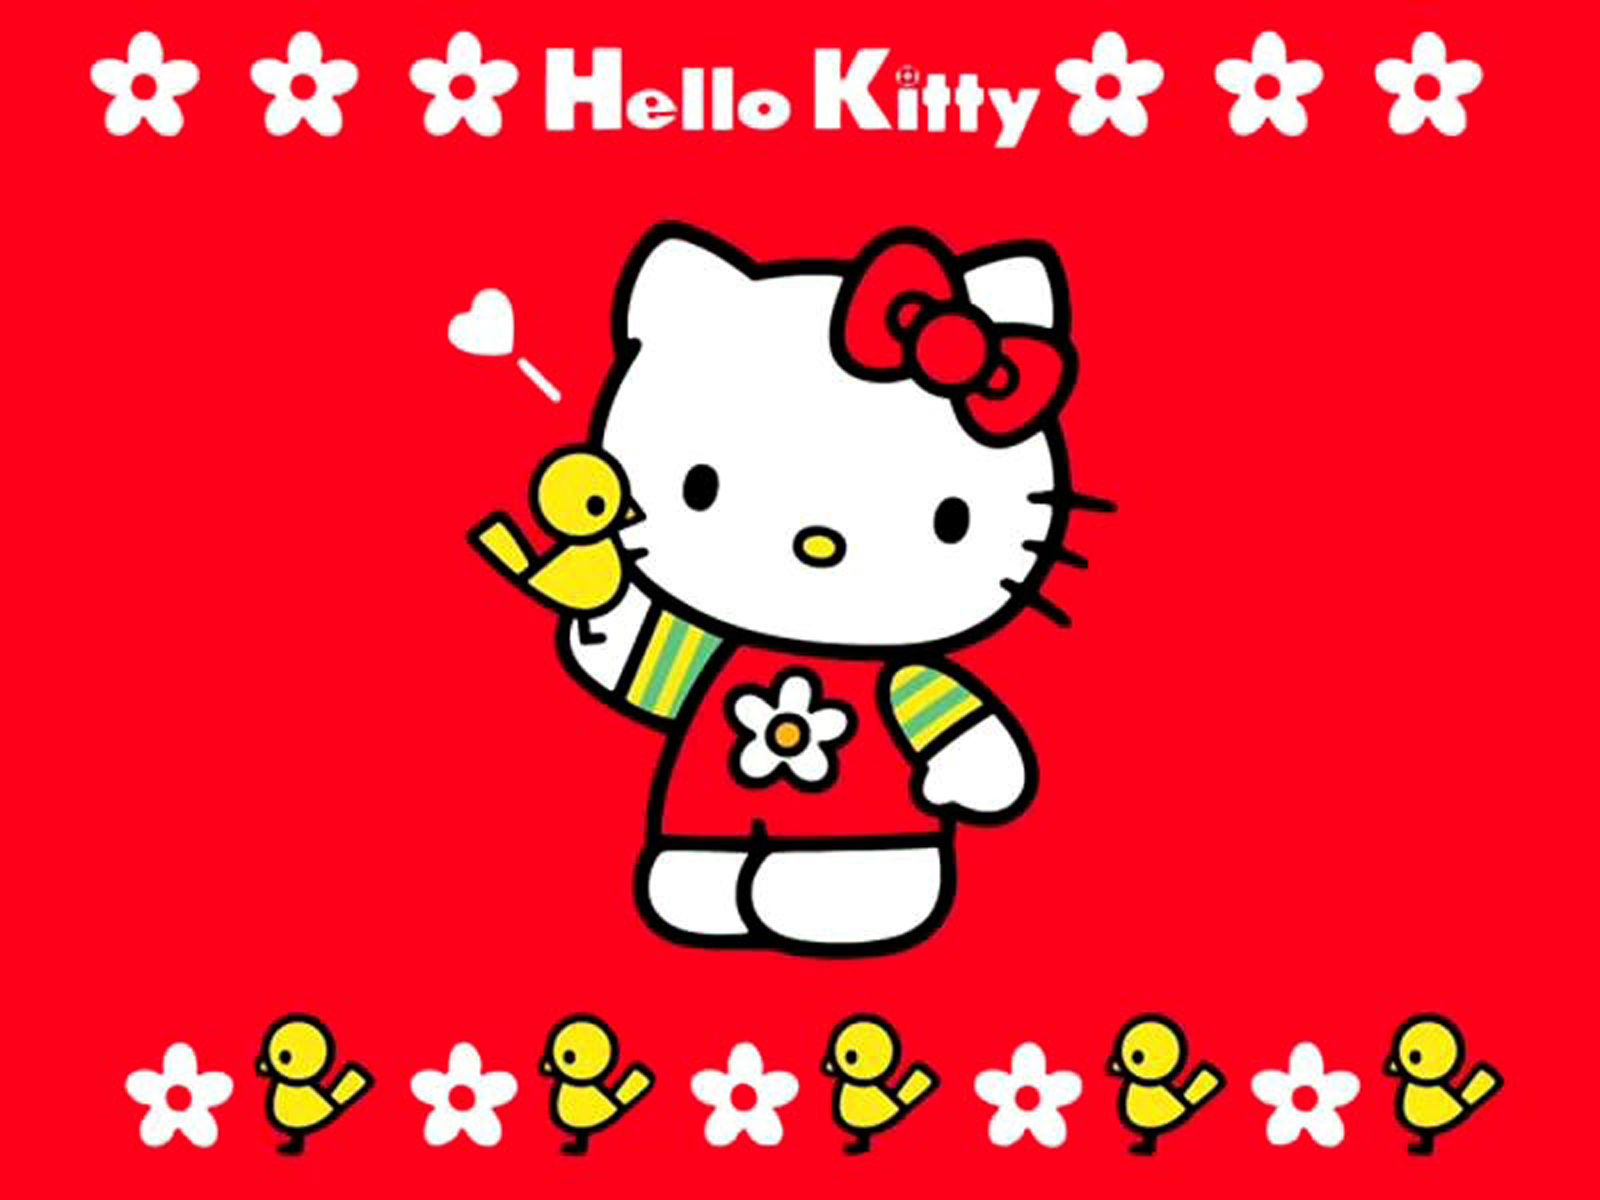 Download 600 Koleksi Gambar Hello Kitty Full Layar Terbaik Gratis ...